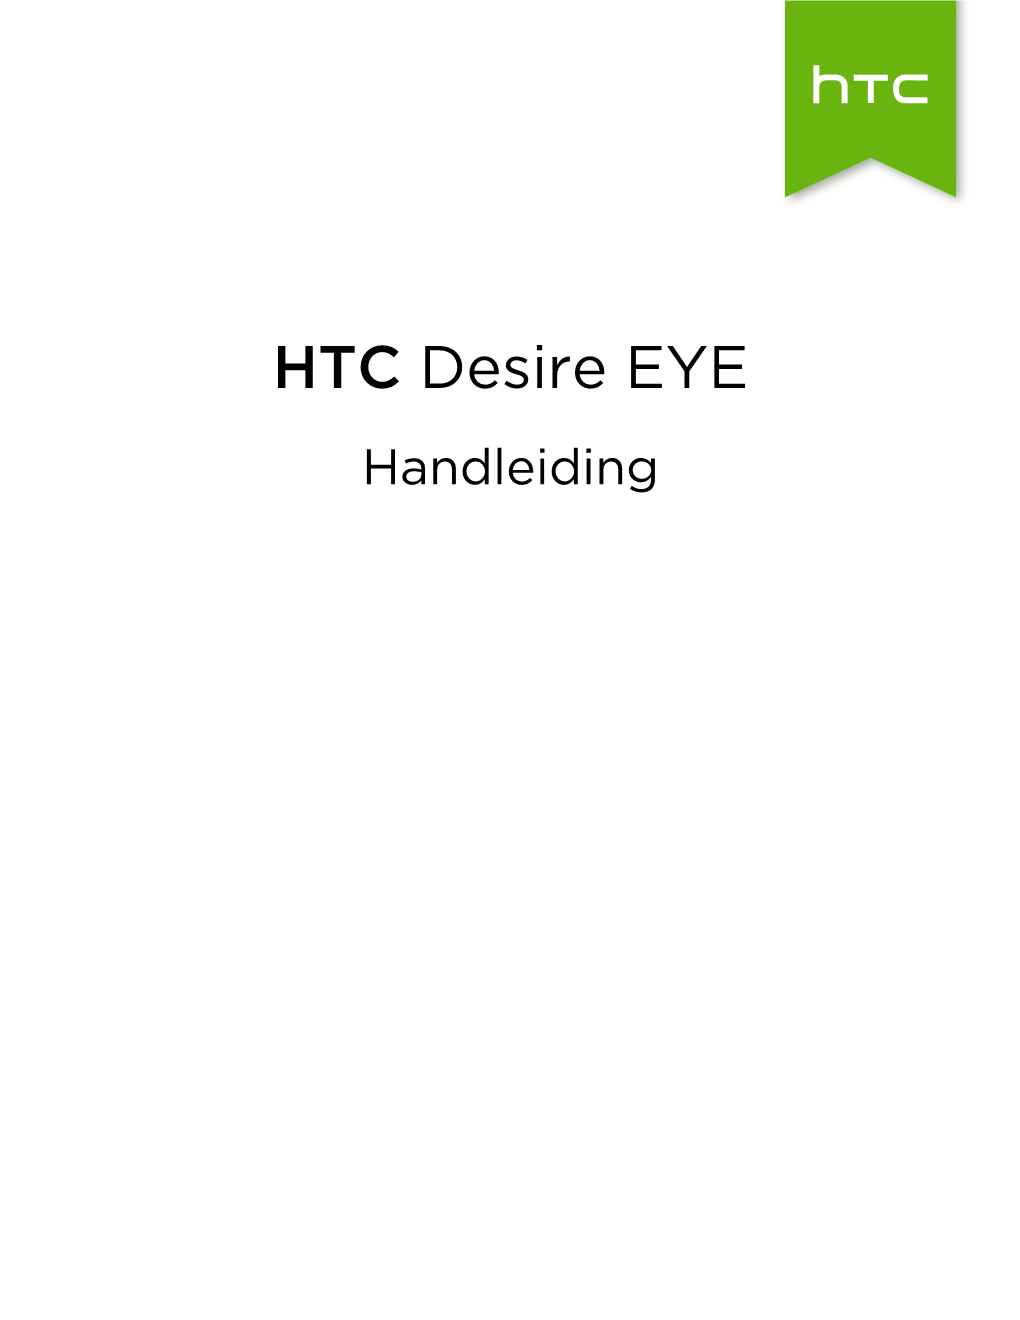 HTC Desire EYE Handleiding 2 Inhoud Inhoud